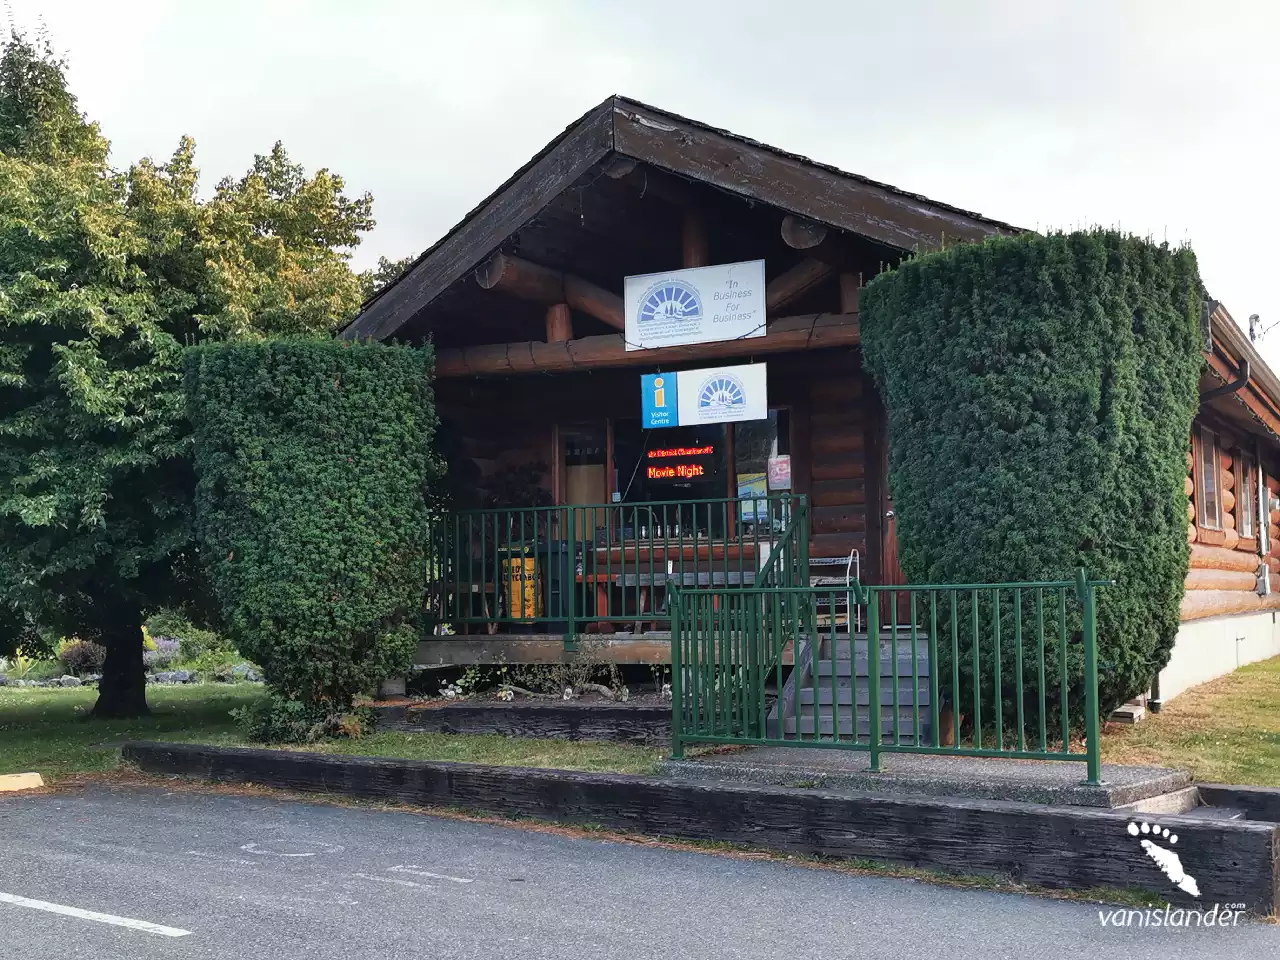 Cowichan Lake Visitor center, Vancouver Island